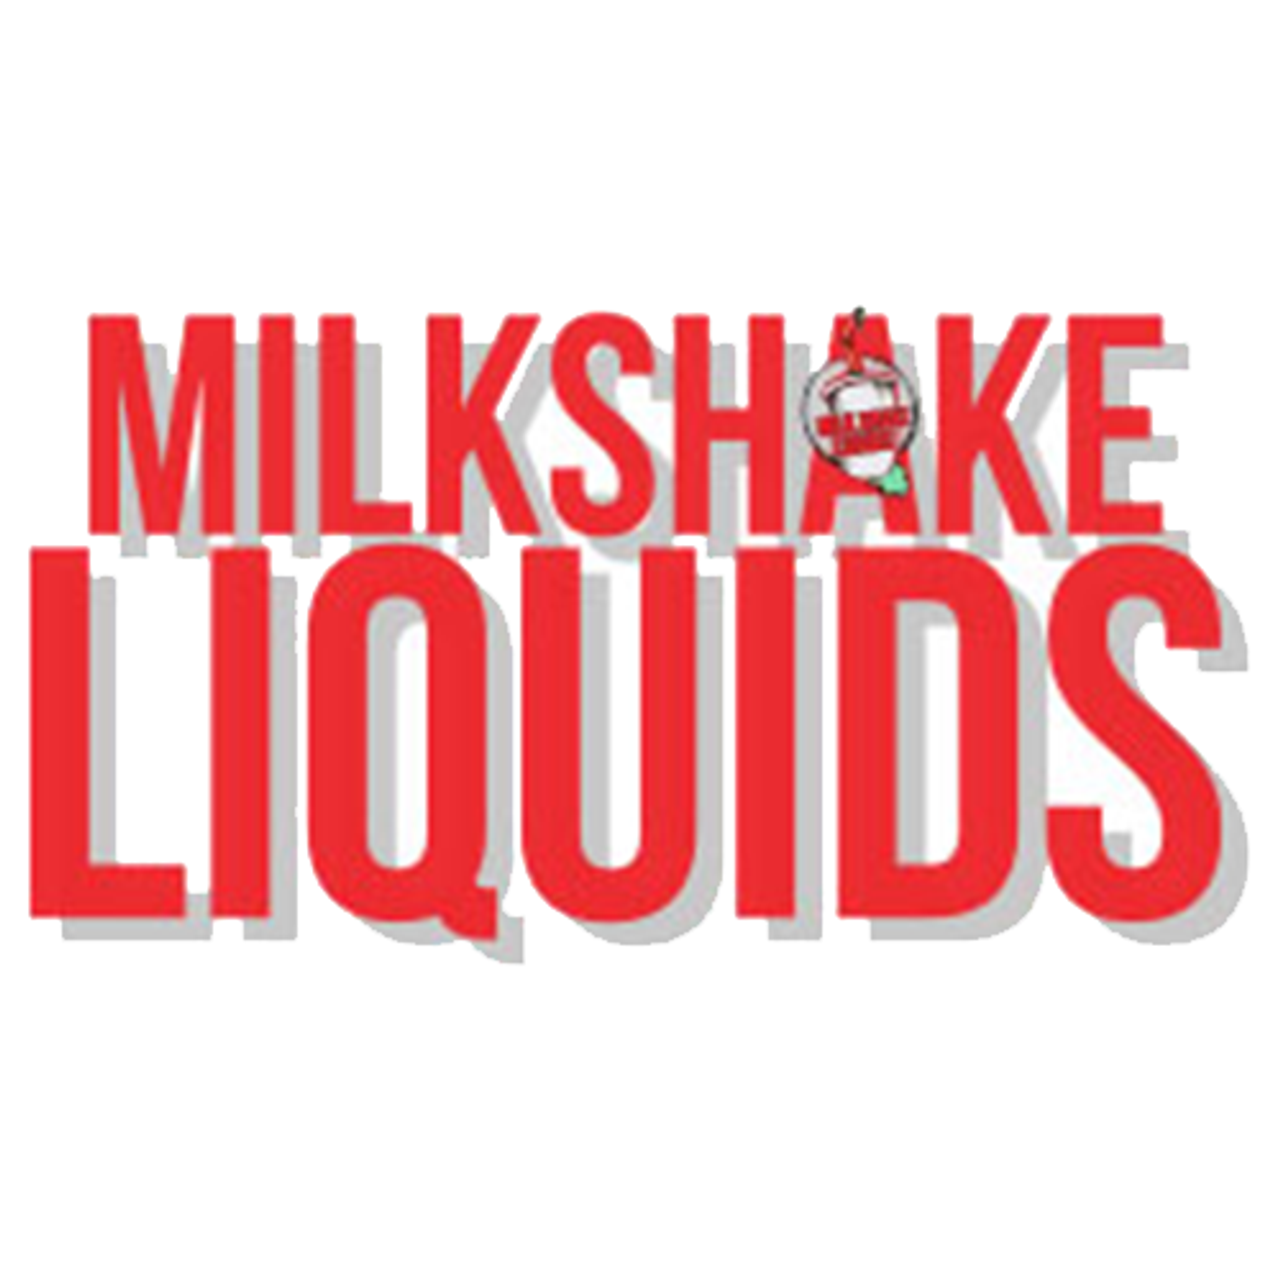 Milkshake E Liquids background